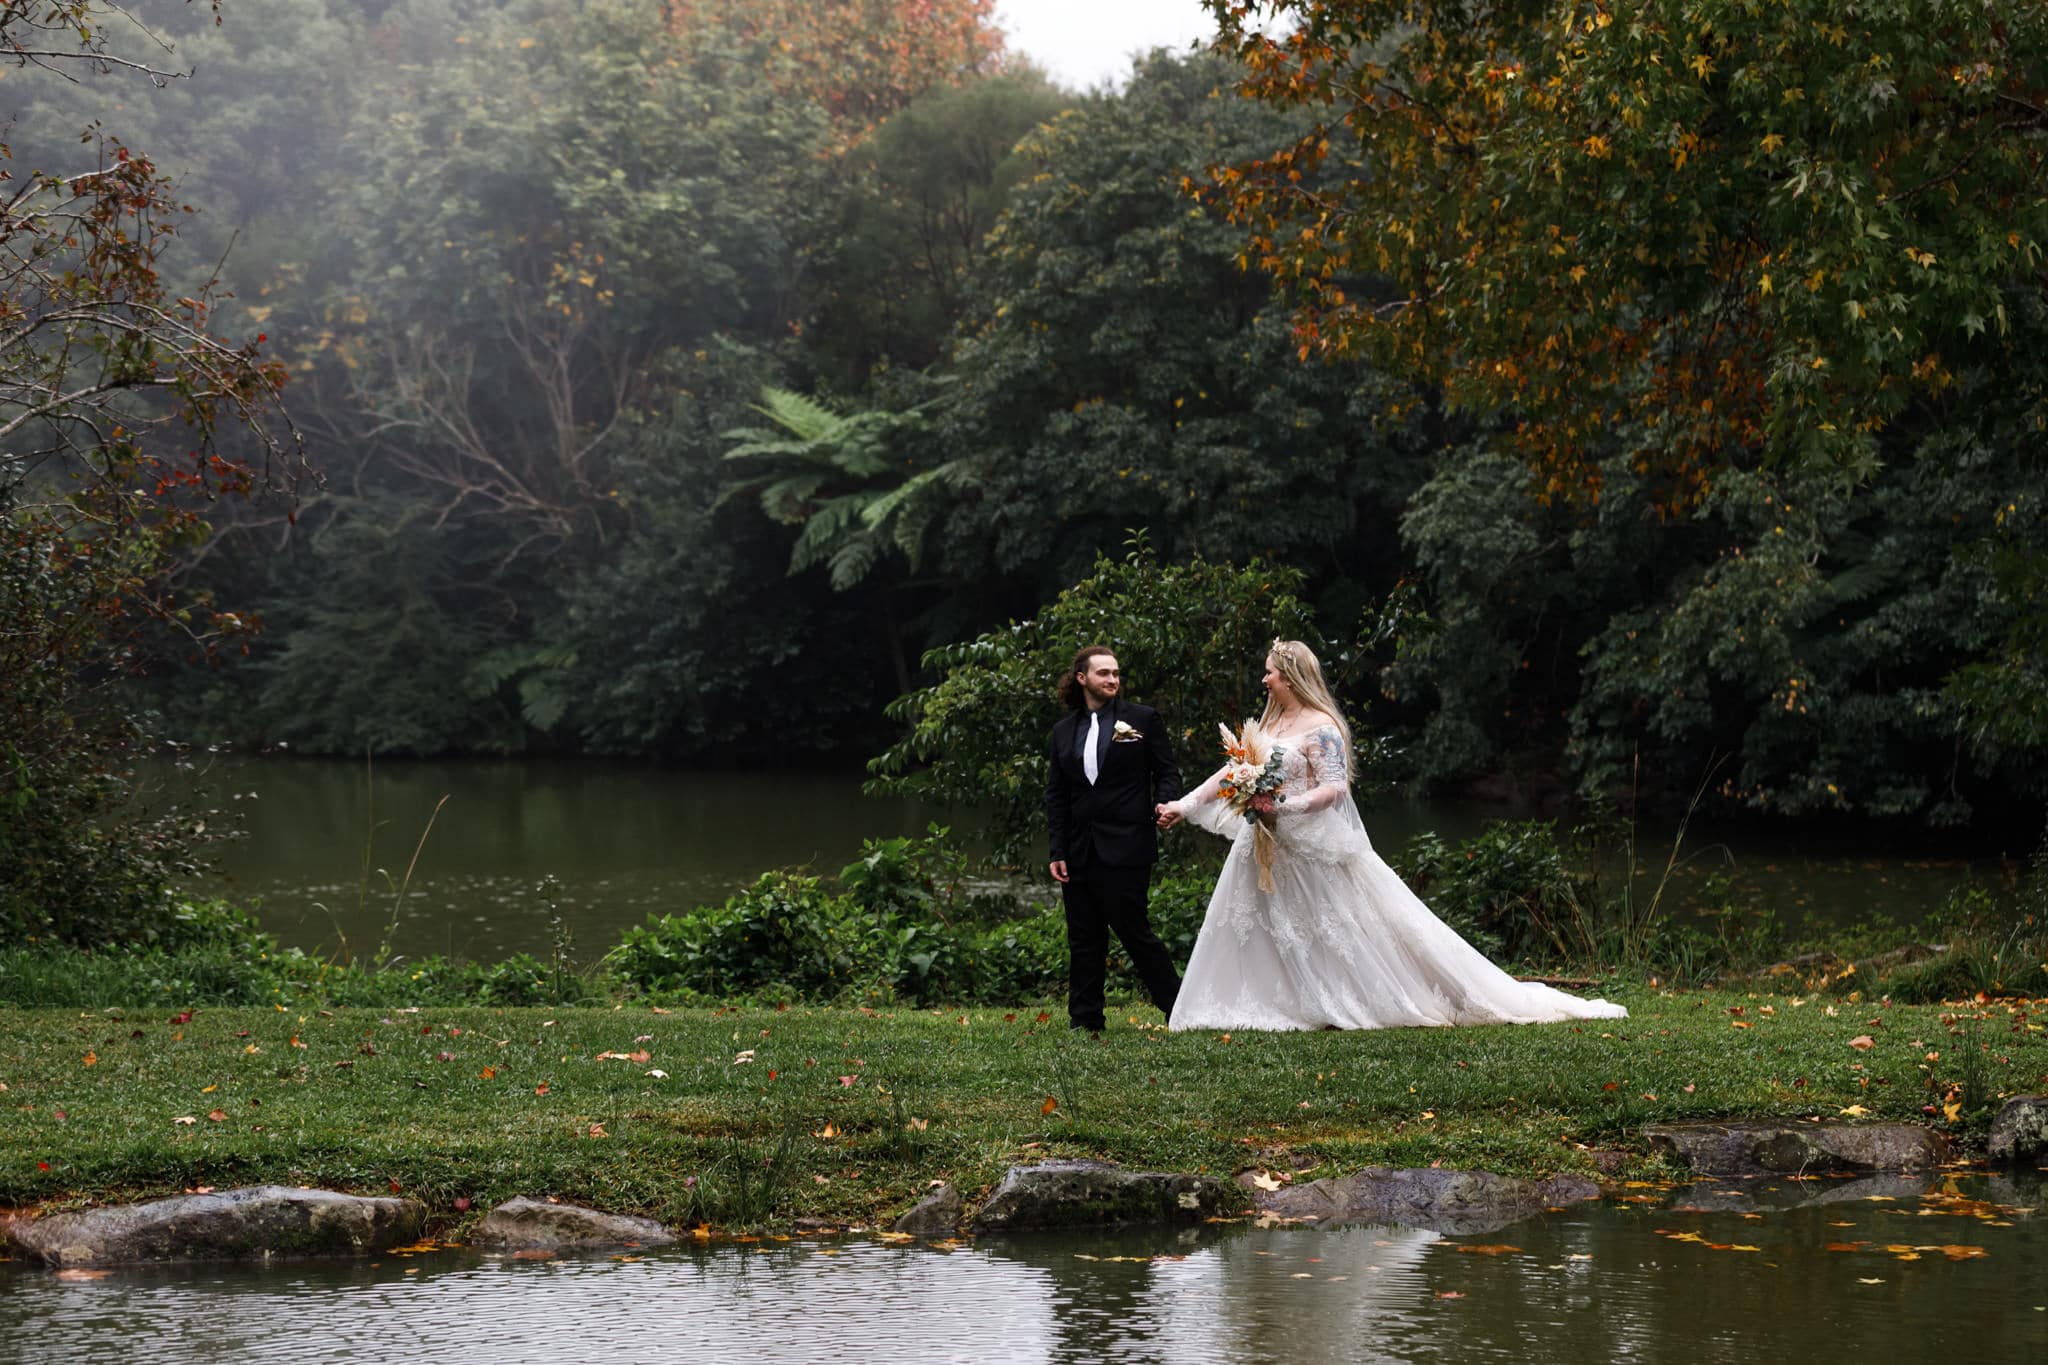 Bridal party photos at Cedar Creek Estate Winery Wedding by Mooi Photography.